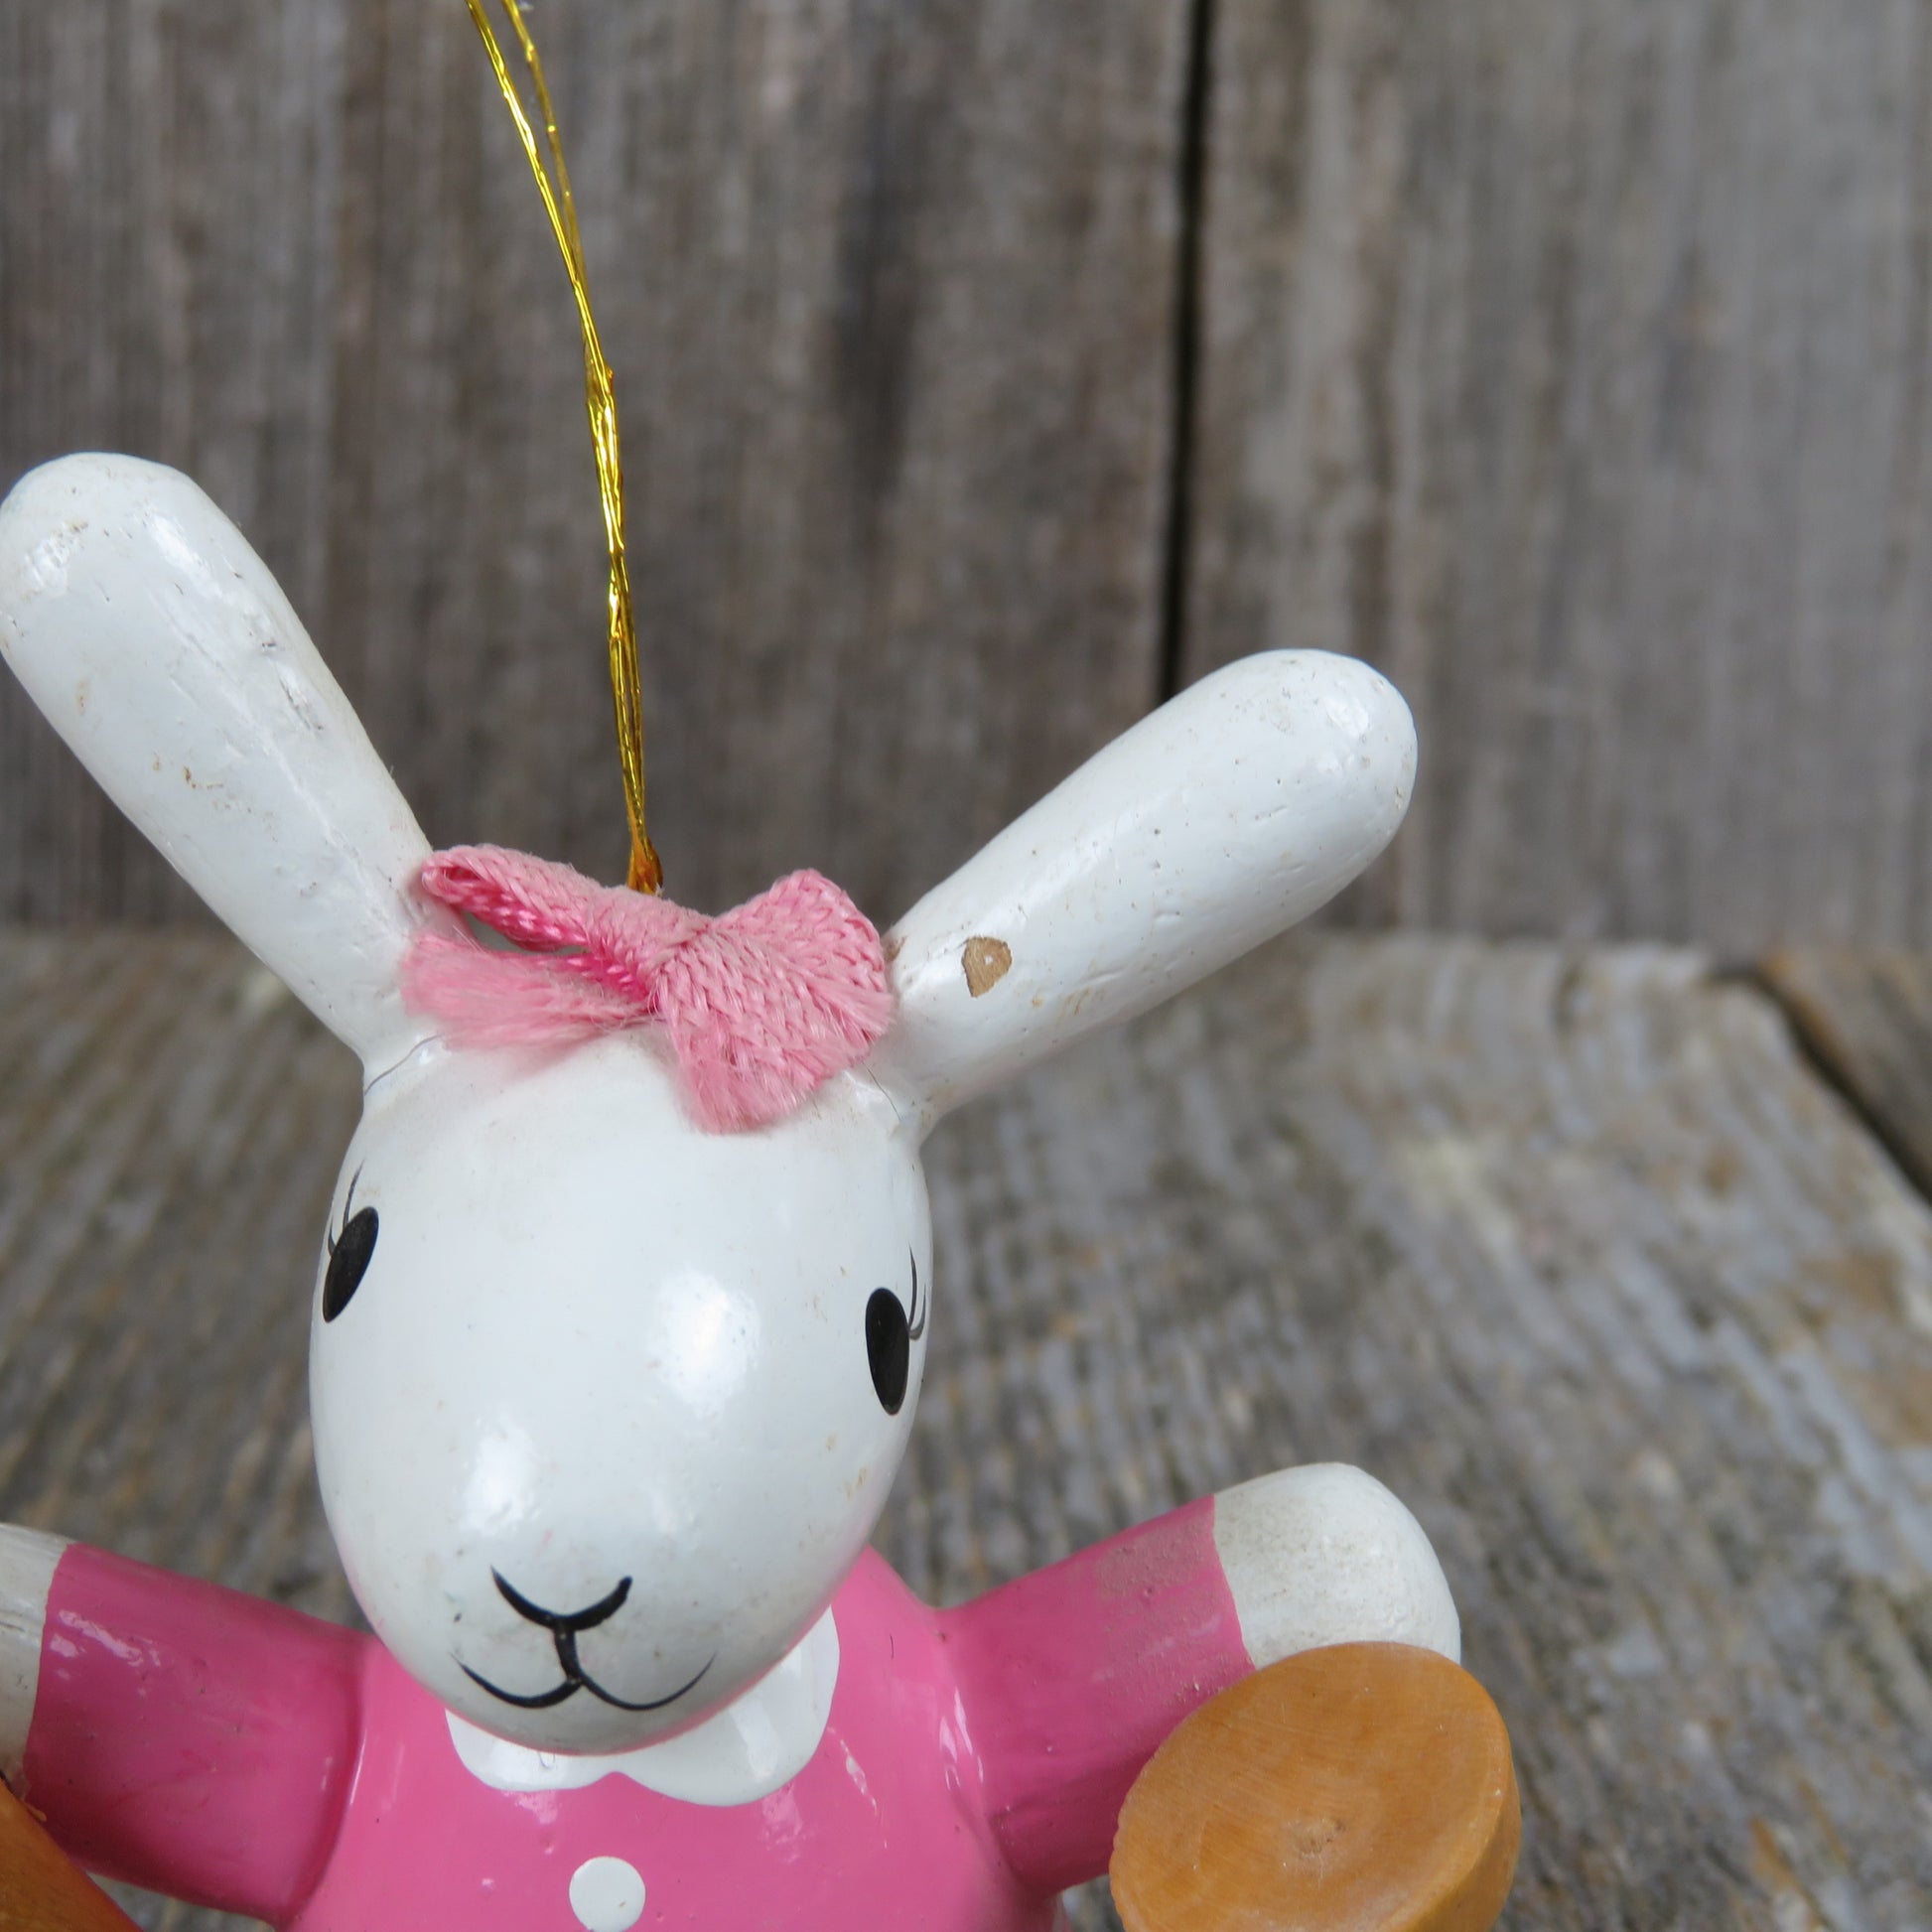 Vintage Bunny Rabbit Baker Ornament Wooden Christmas Wood Pink Easter White Girl - At Grandma's Table